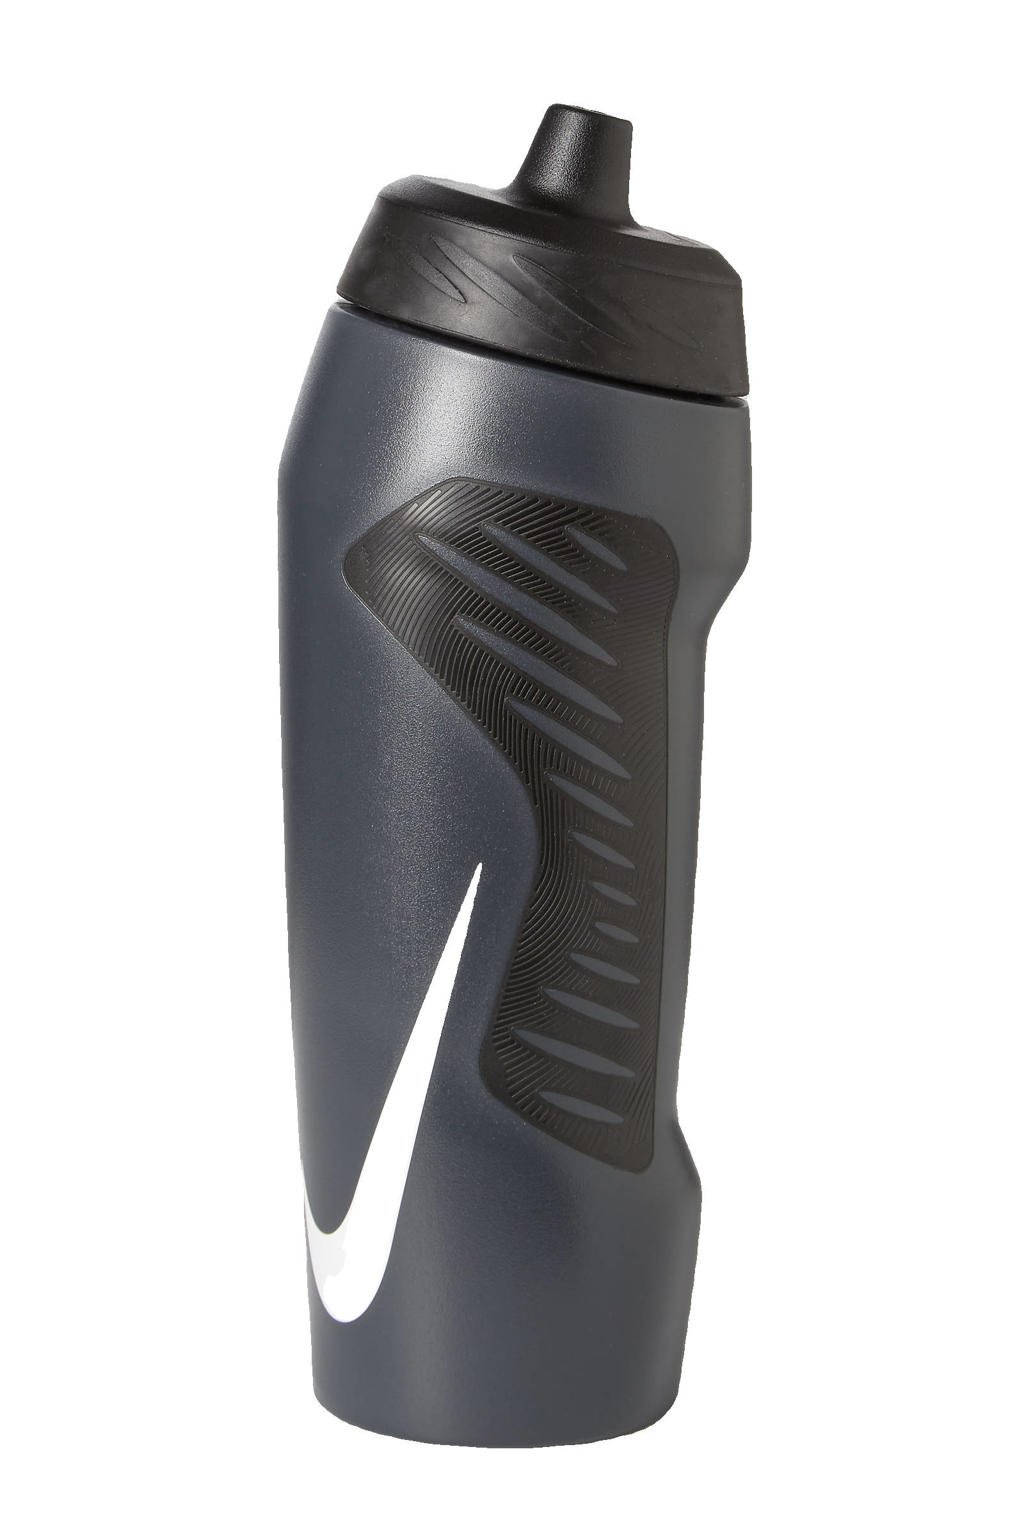 Nike   sportbidon - 710 ml grijs/zwart